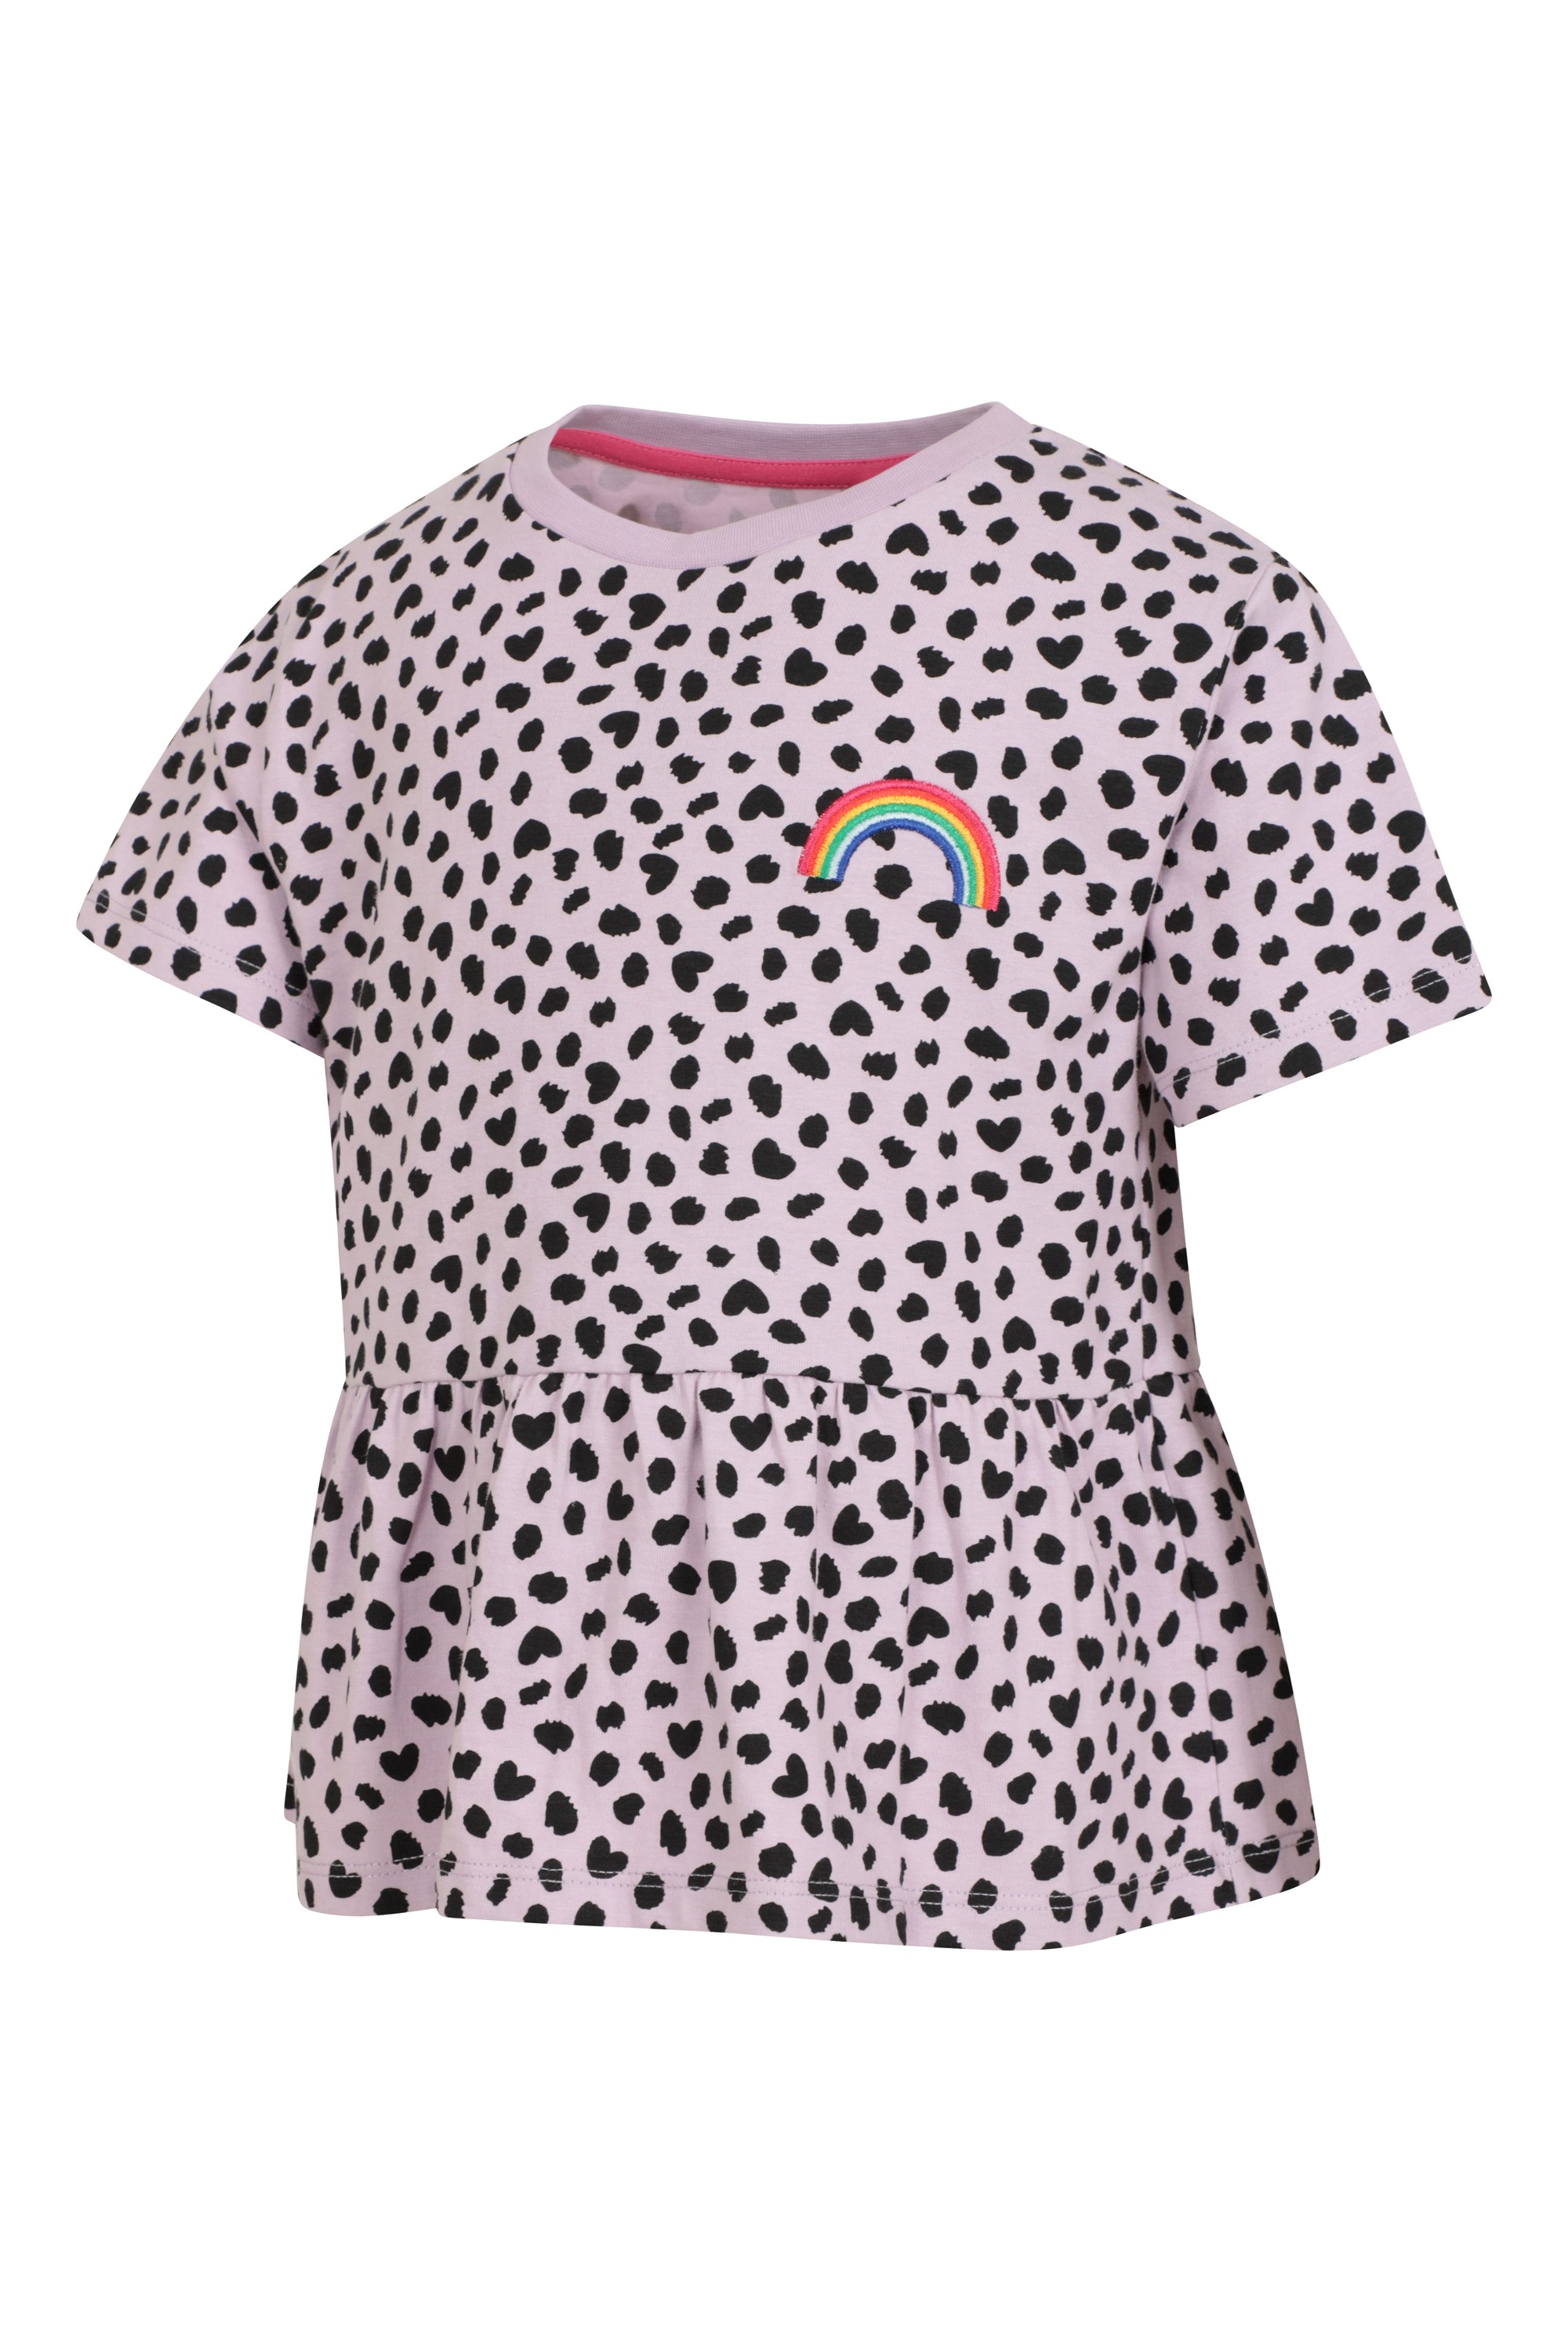 Mountain Warehouse Mountain Warehouse Girls Leopard T-Shirt Ruffle Hem Kids Organic Summer Tee 